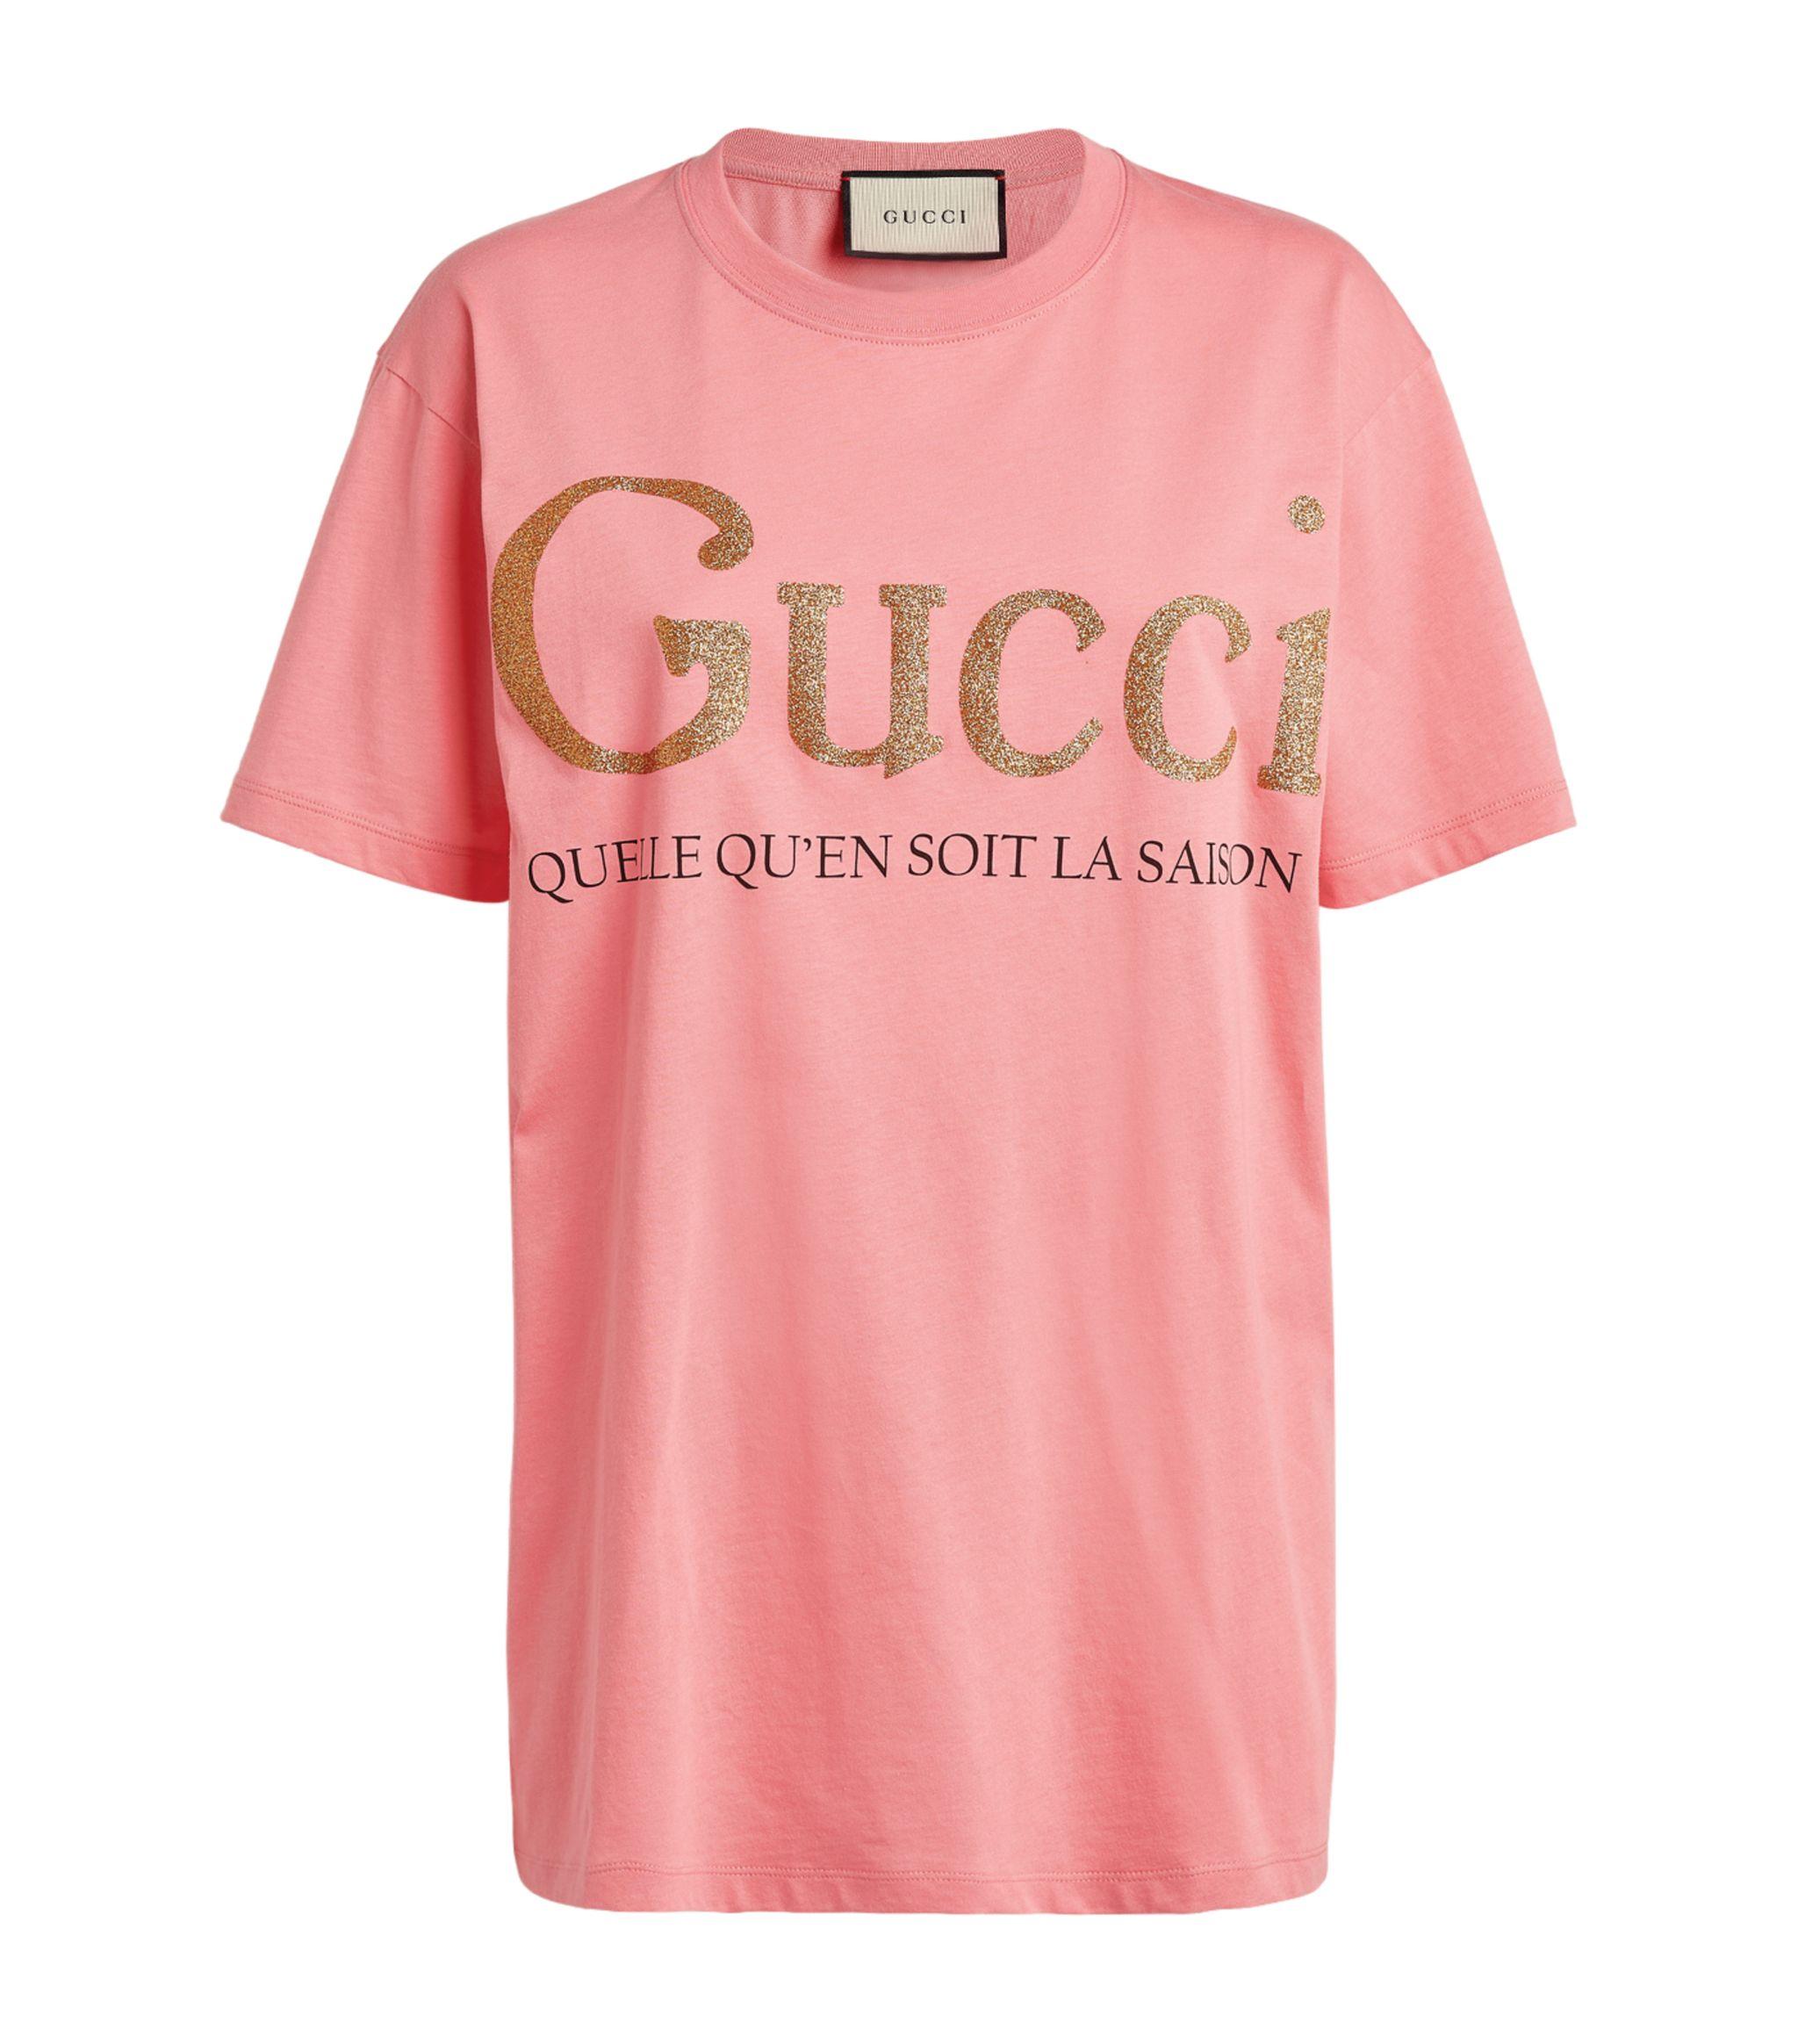 Gucci Cotton Slogan T-shirt in Pink - Lyst